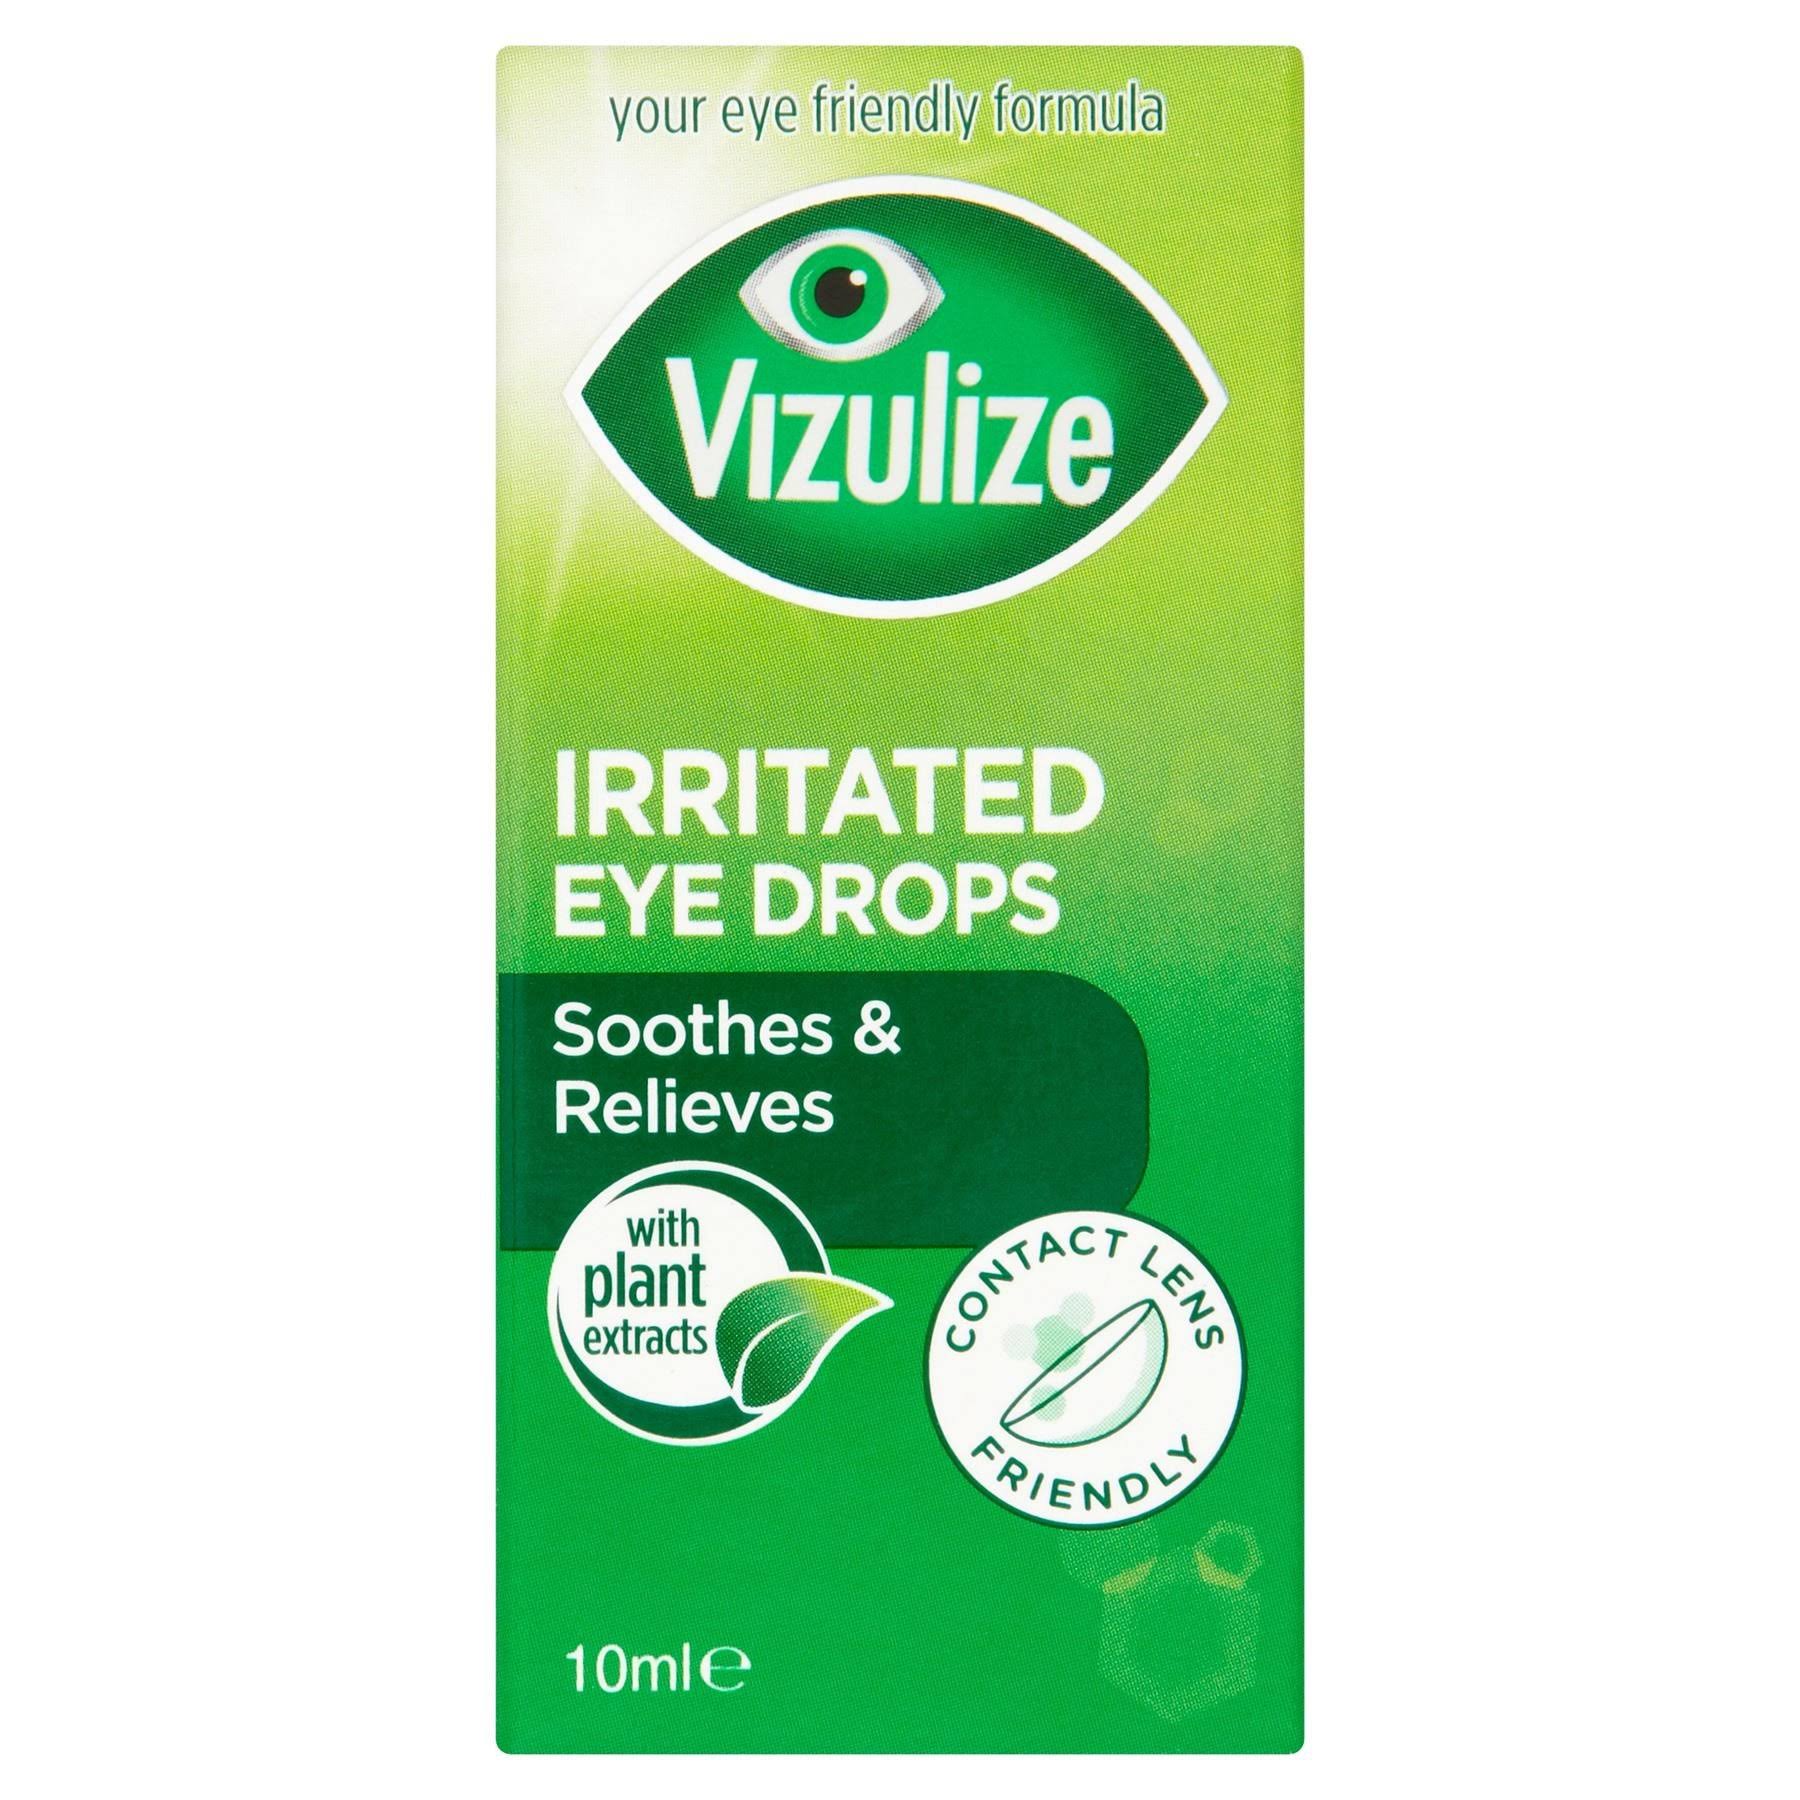 Vizulize Irritated Eye Drops - 10ml